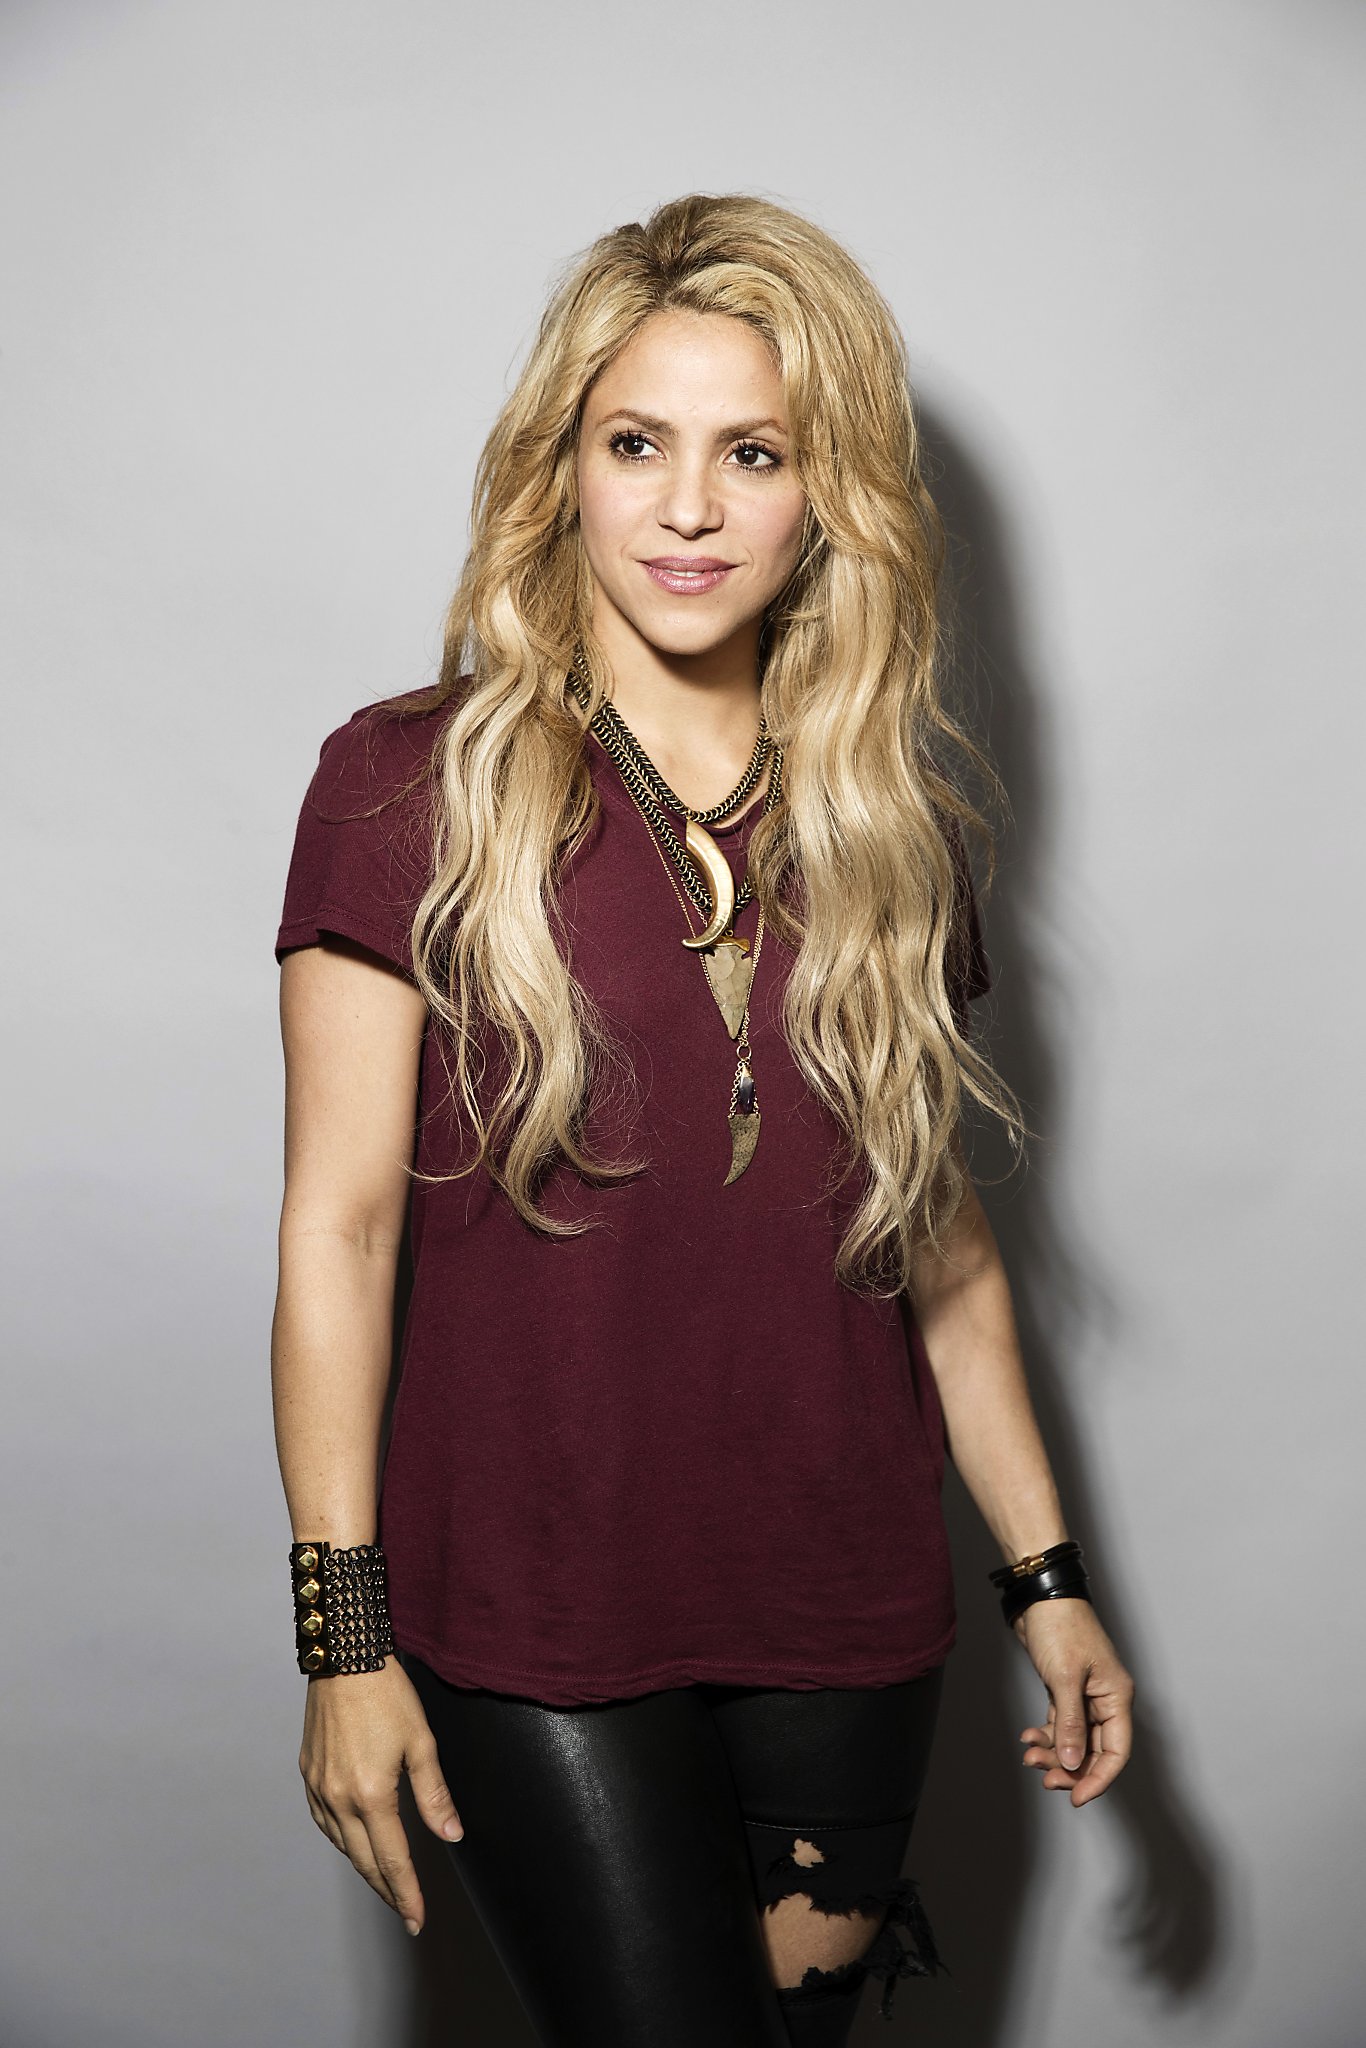 Shakira announces San Antonio concert date